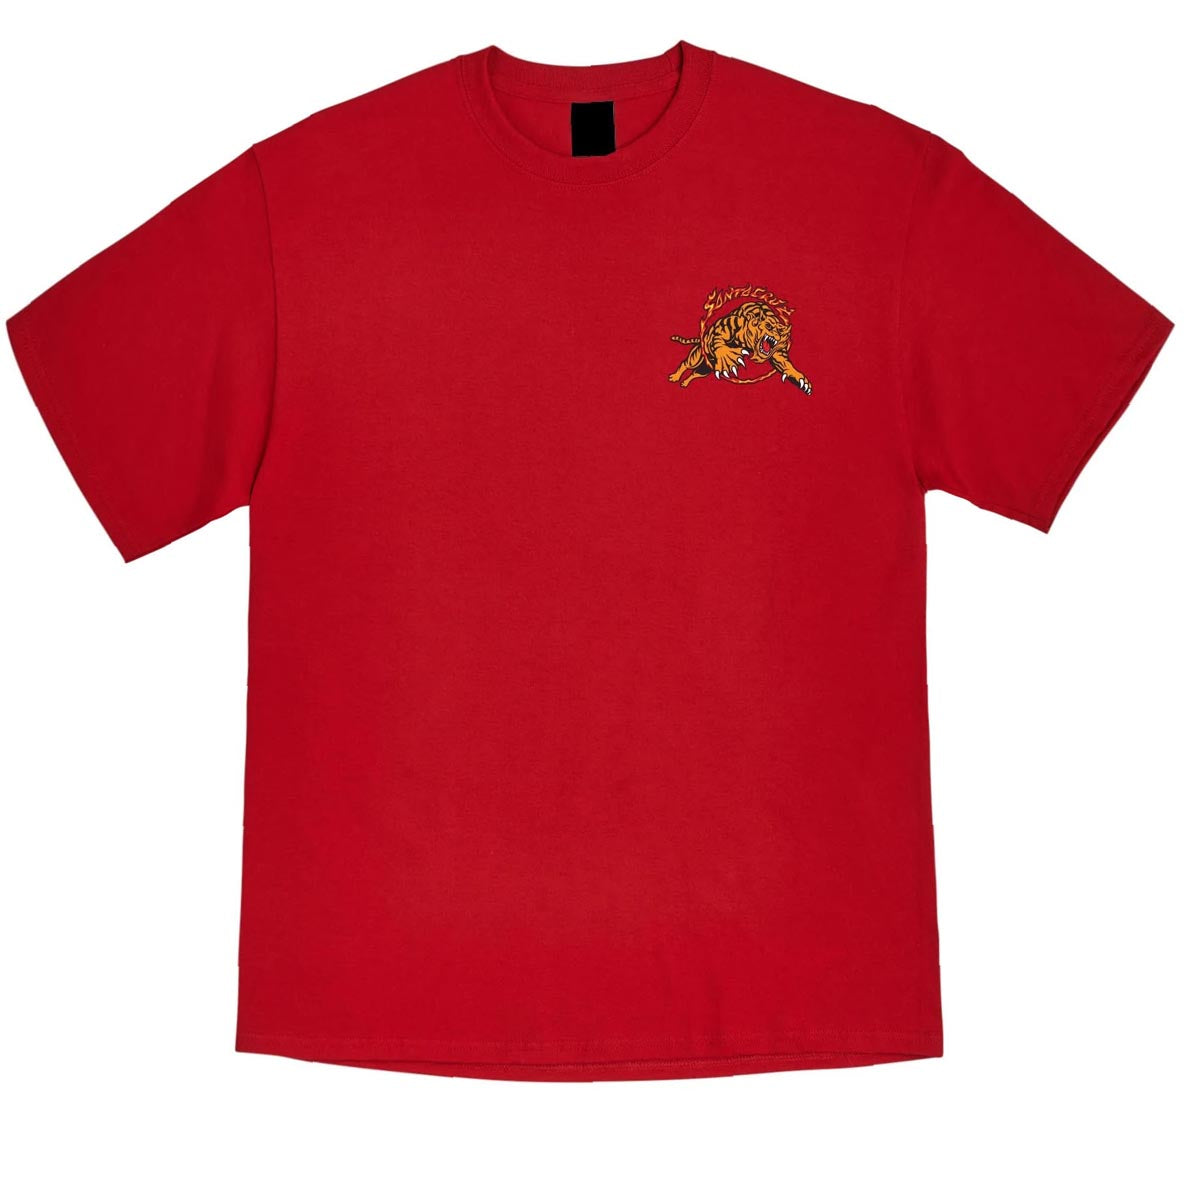 Santa Cruz Salba Tiger Redux T-Shirt - Rich Red image 2